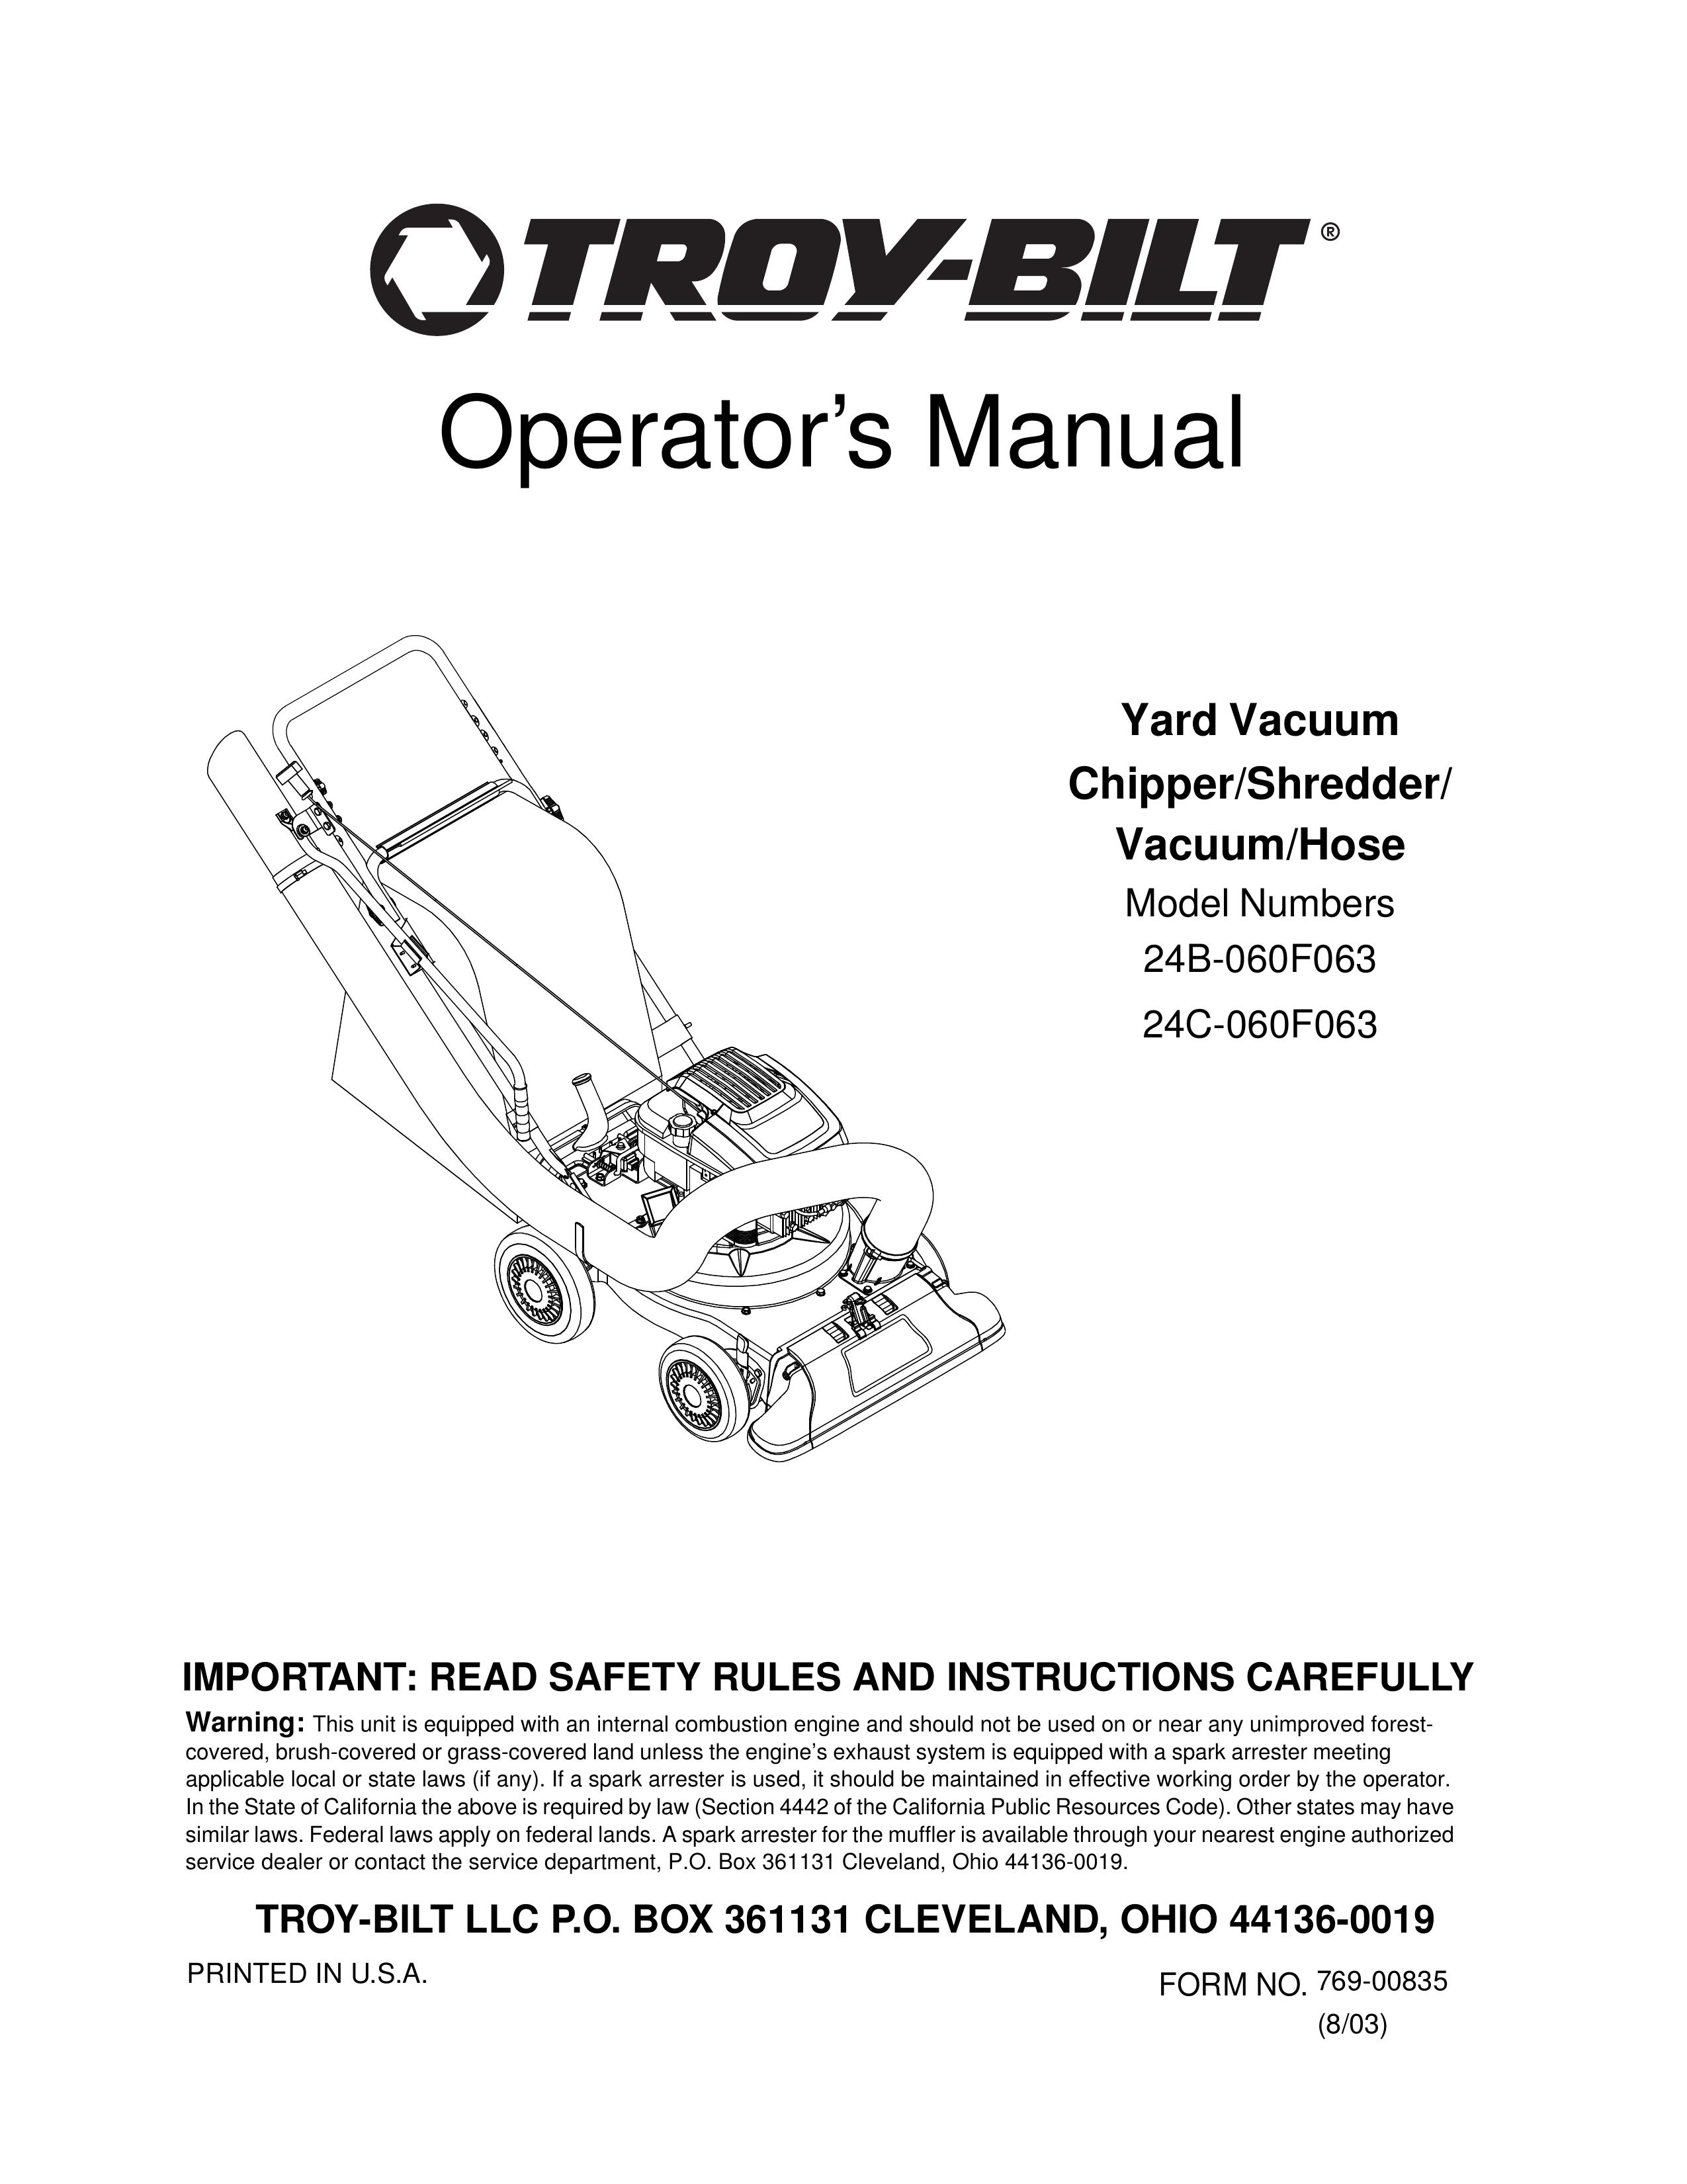 Troy-Bilt 24B-060F063 Yard Vacuum User Manual